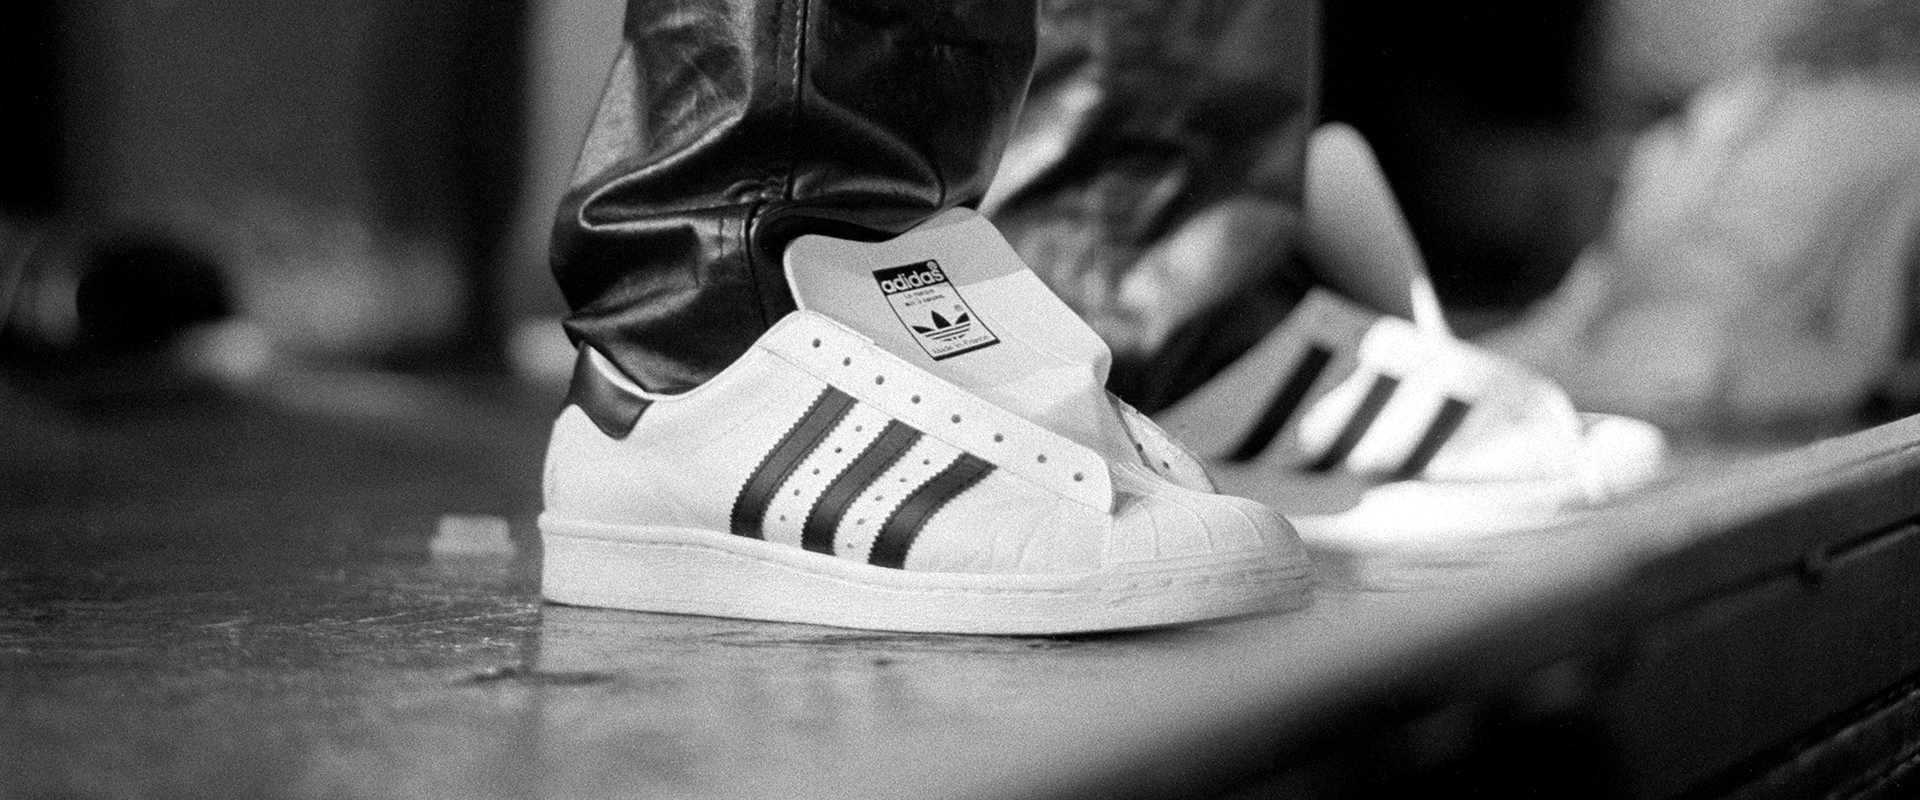 Adidas Superstar shoes at a Run-DMC’s concert 1986